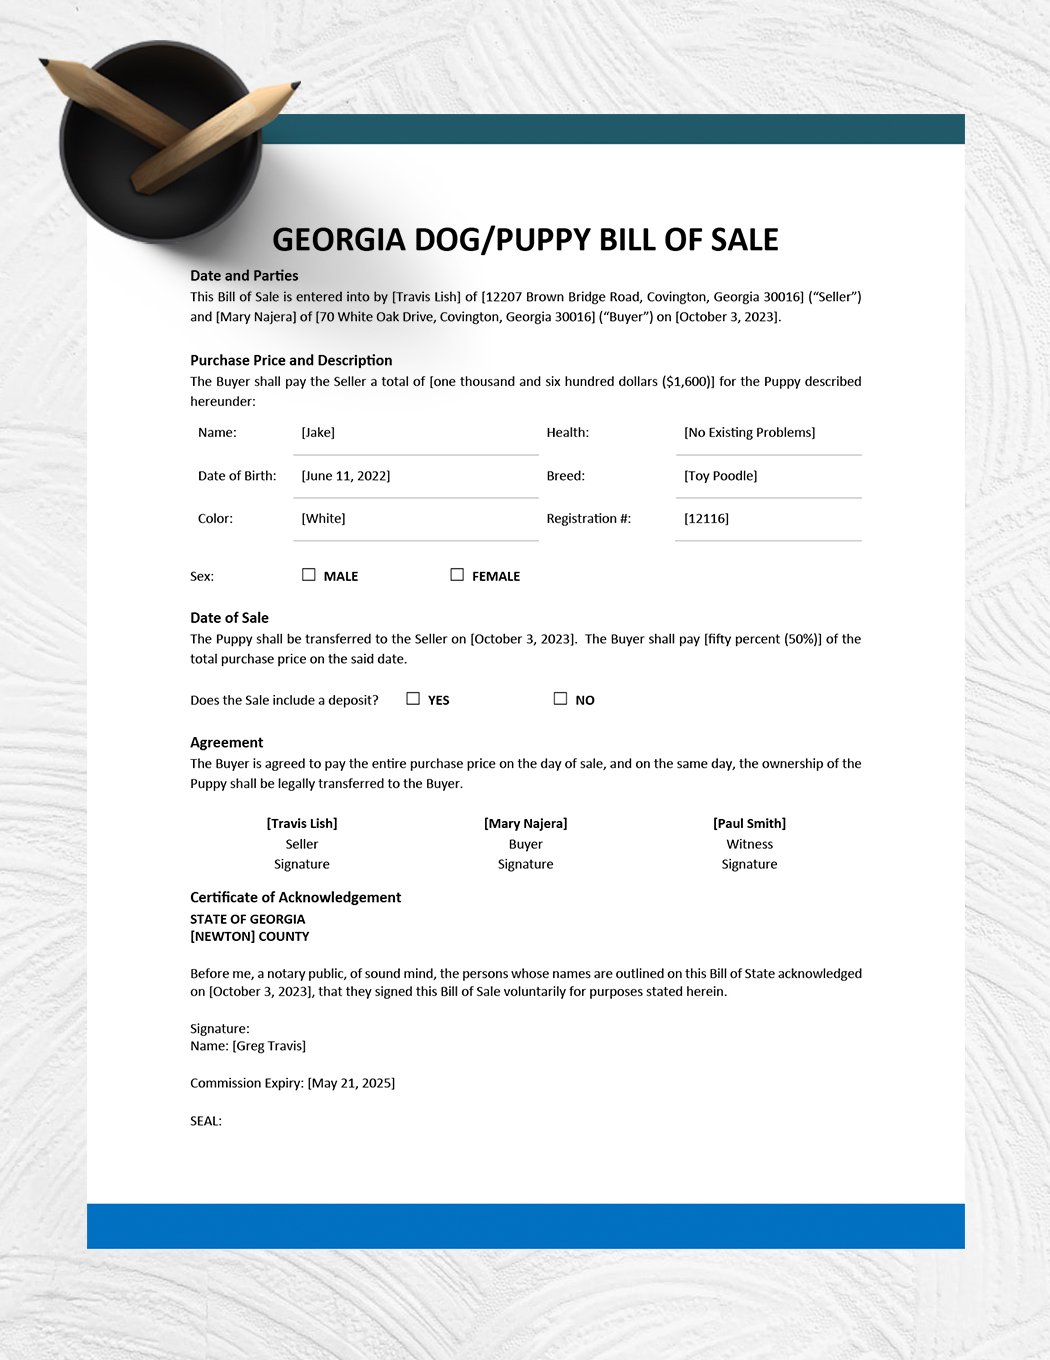 Georgia Dog / Puppy Bill of Sale Template